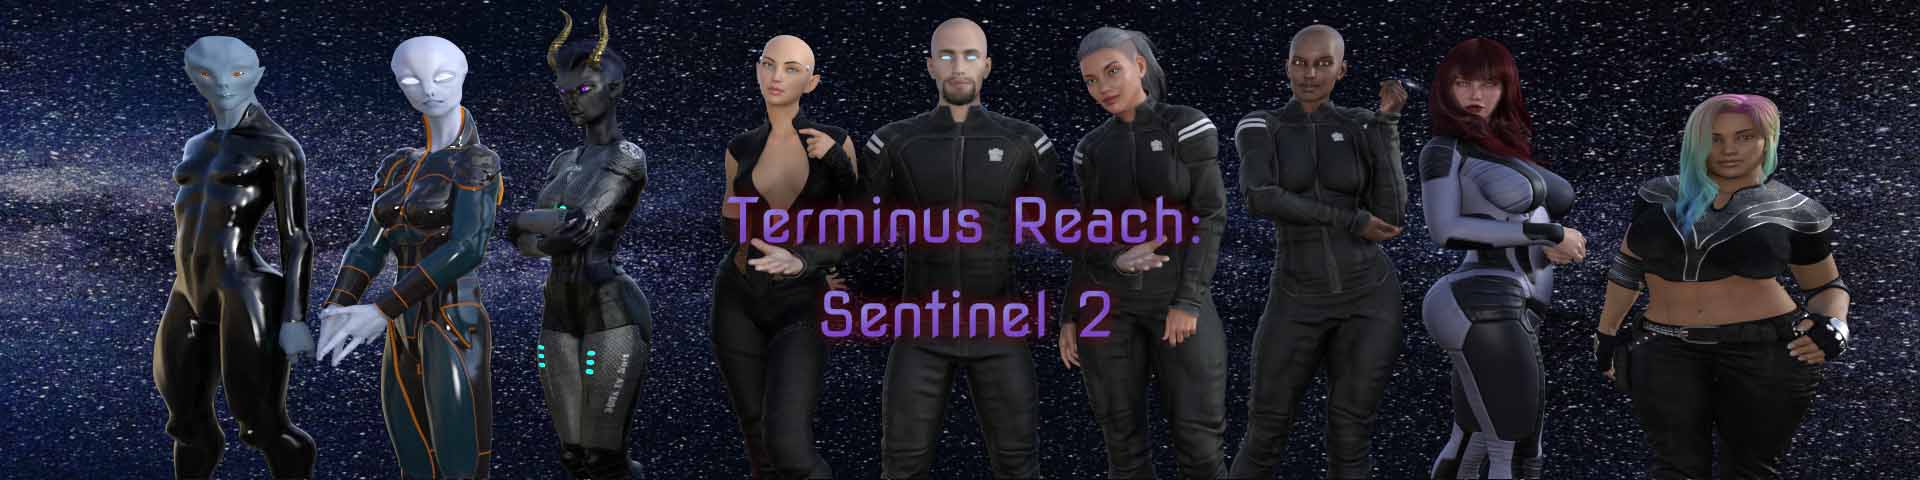 Terminus Reach Sentinel 2